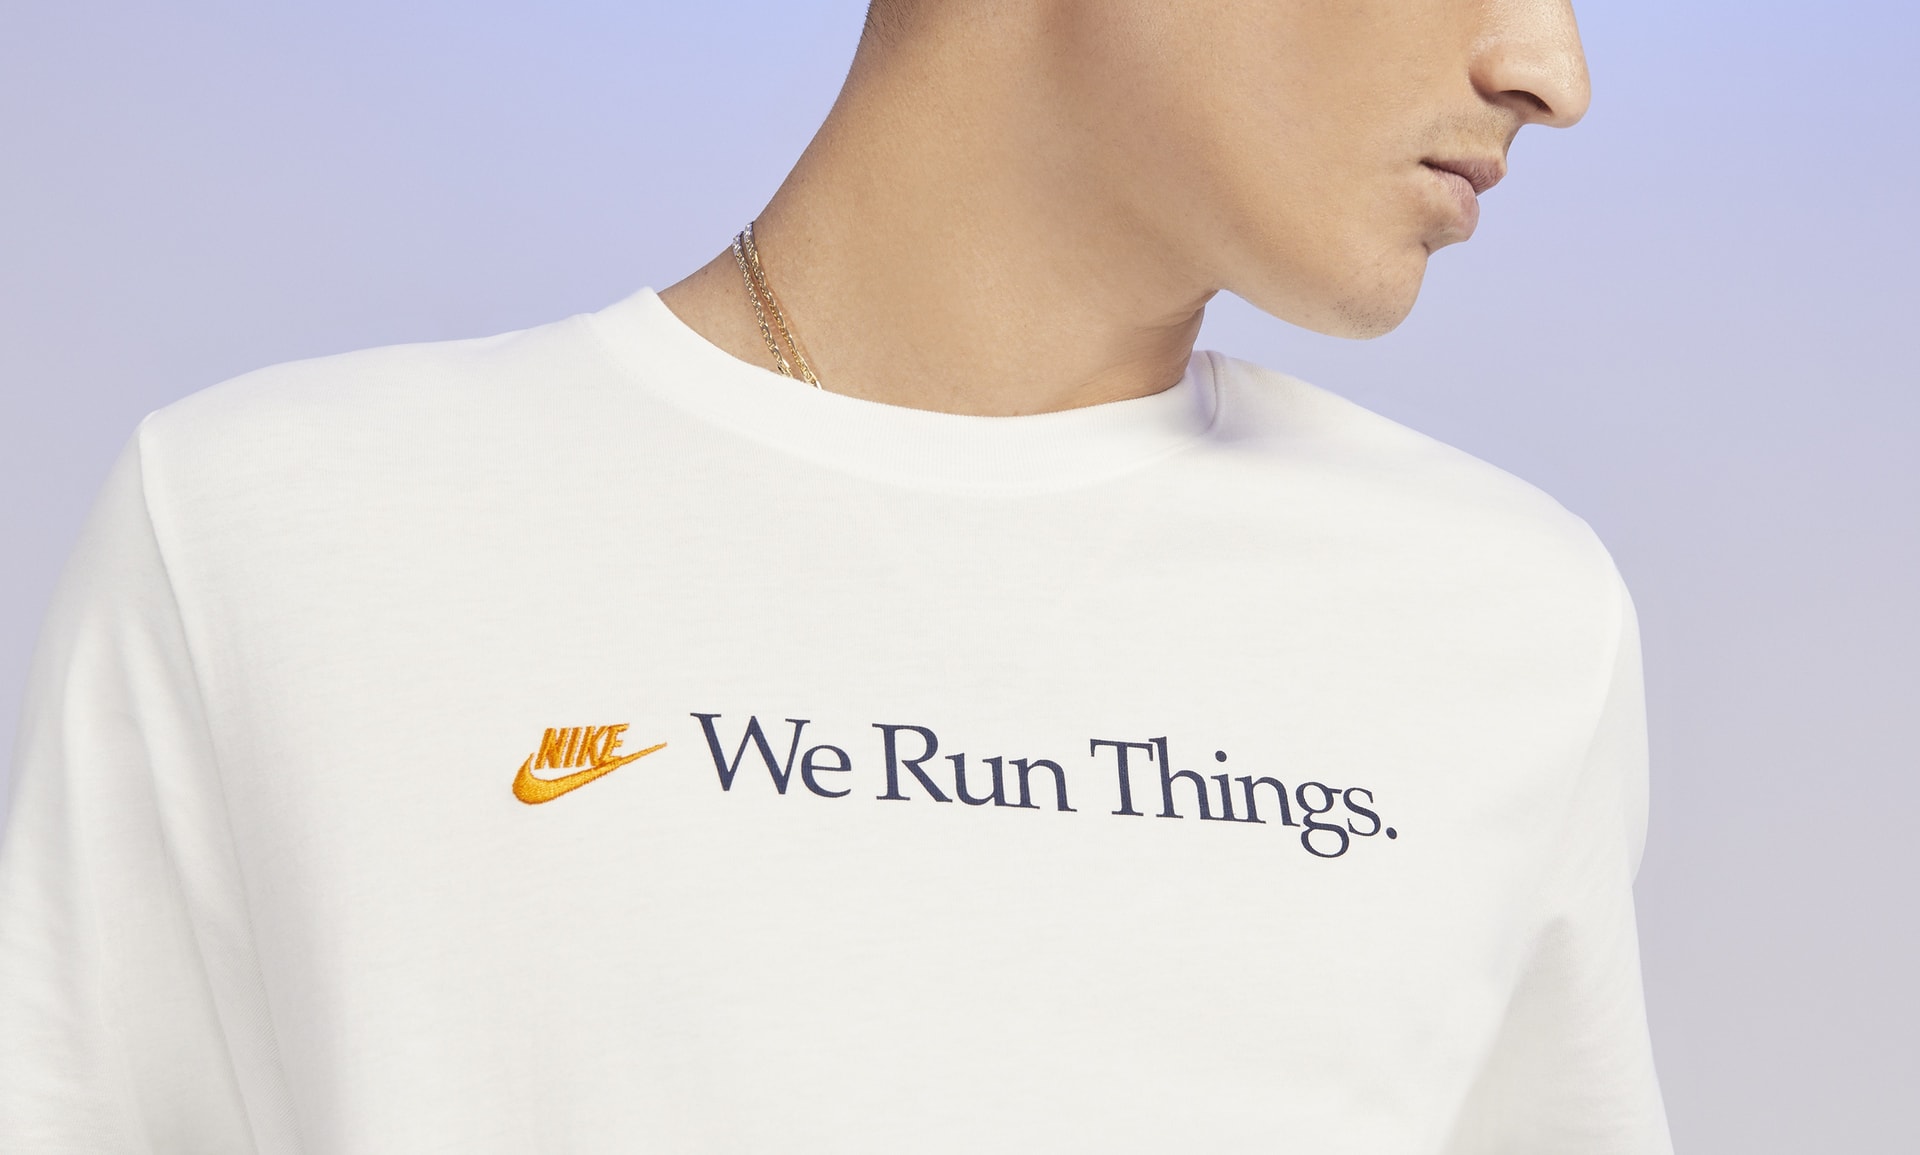 nike we run things shirt